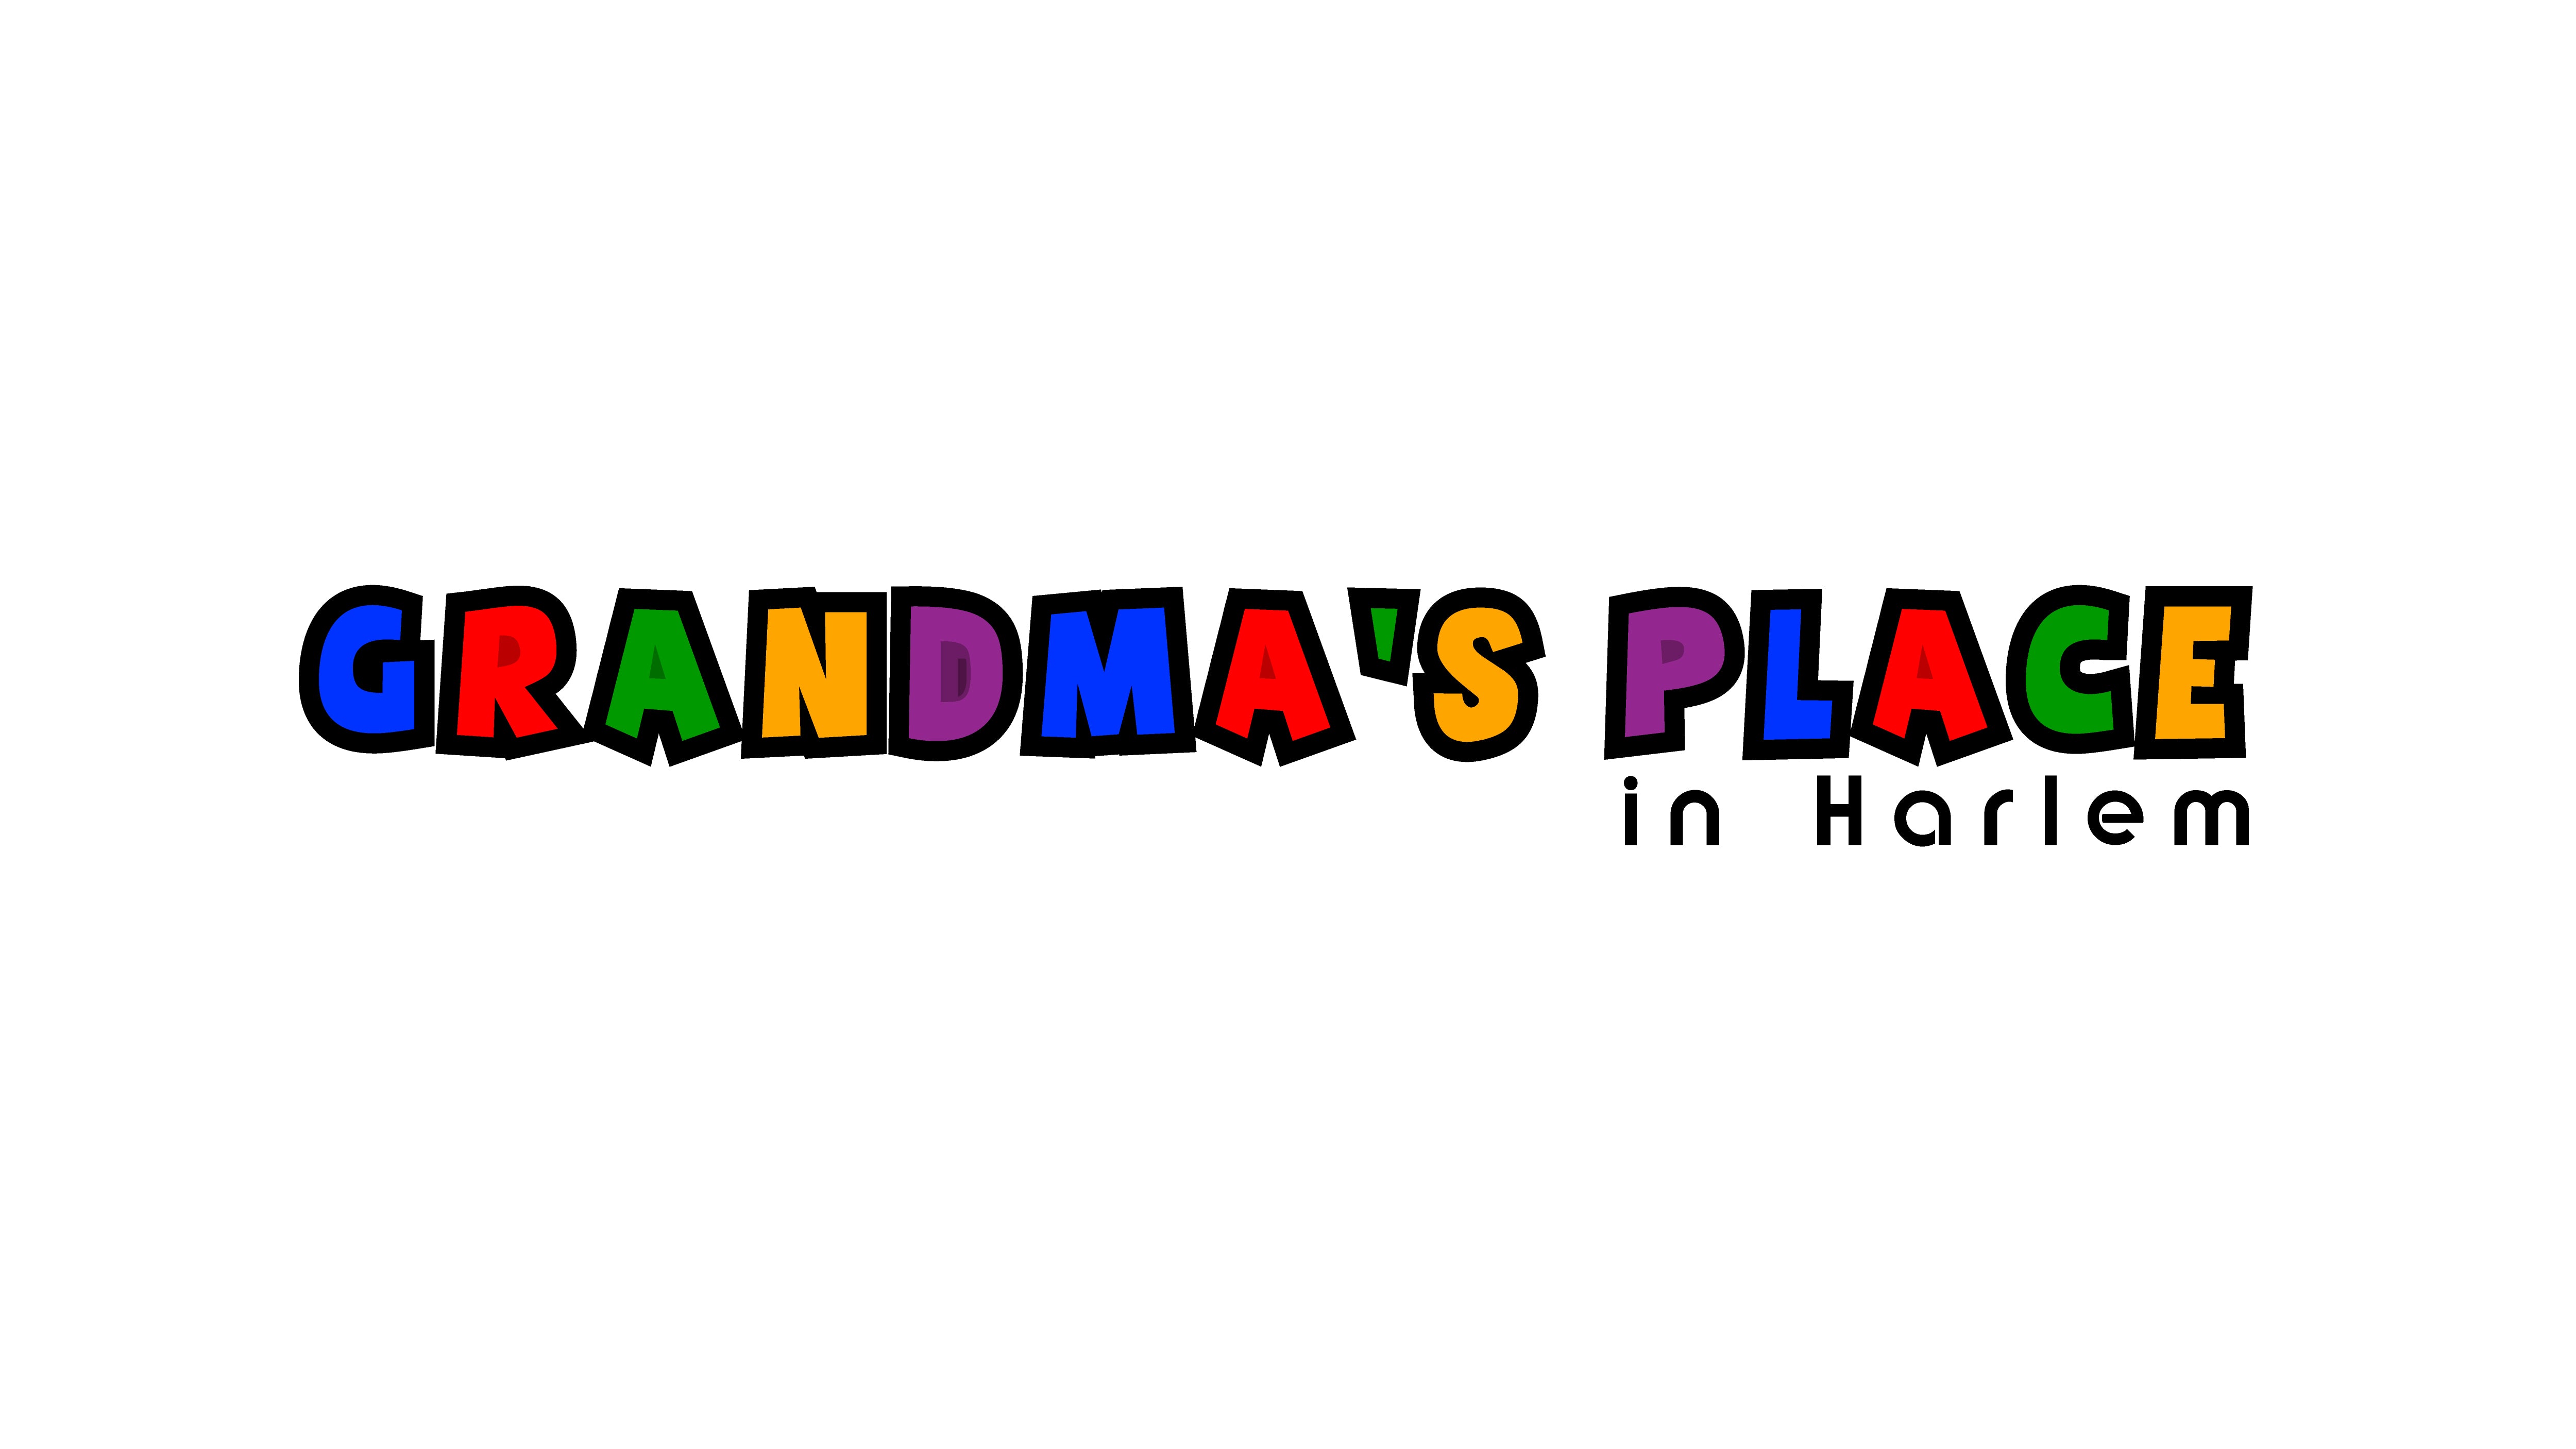 Grandma's Place